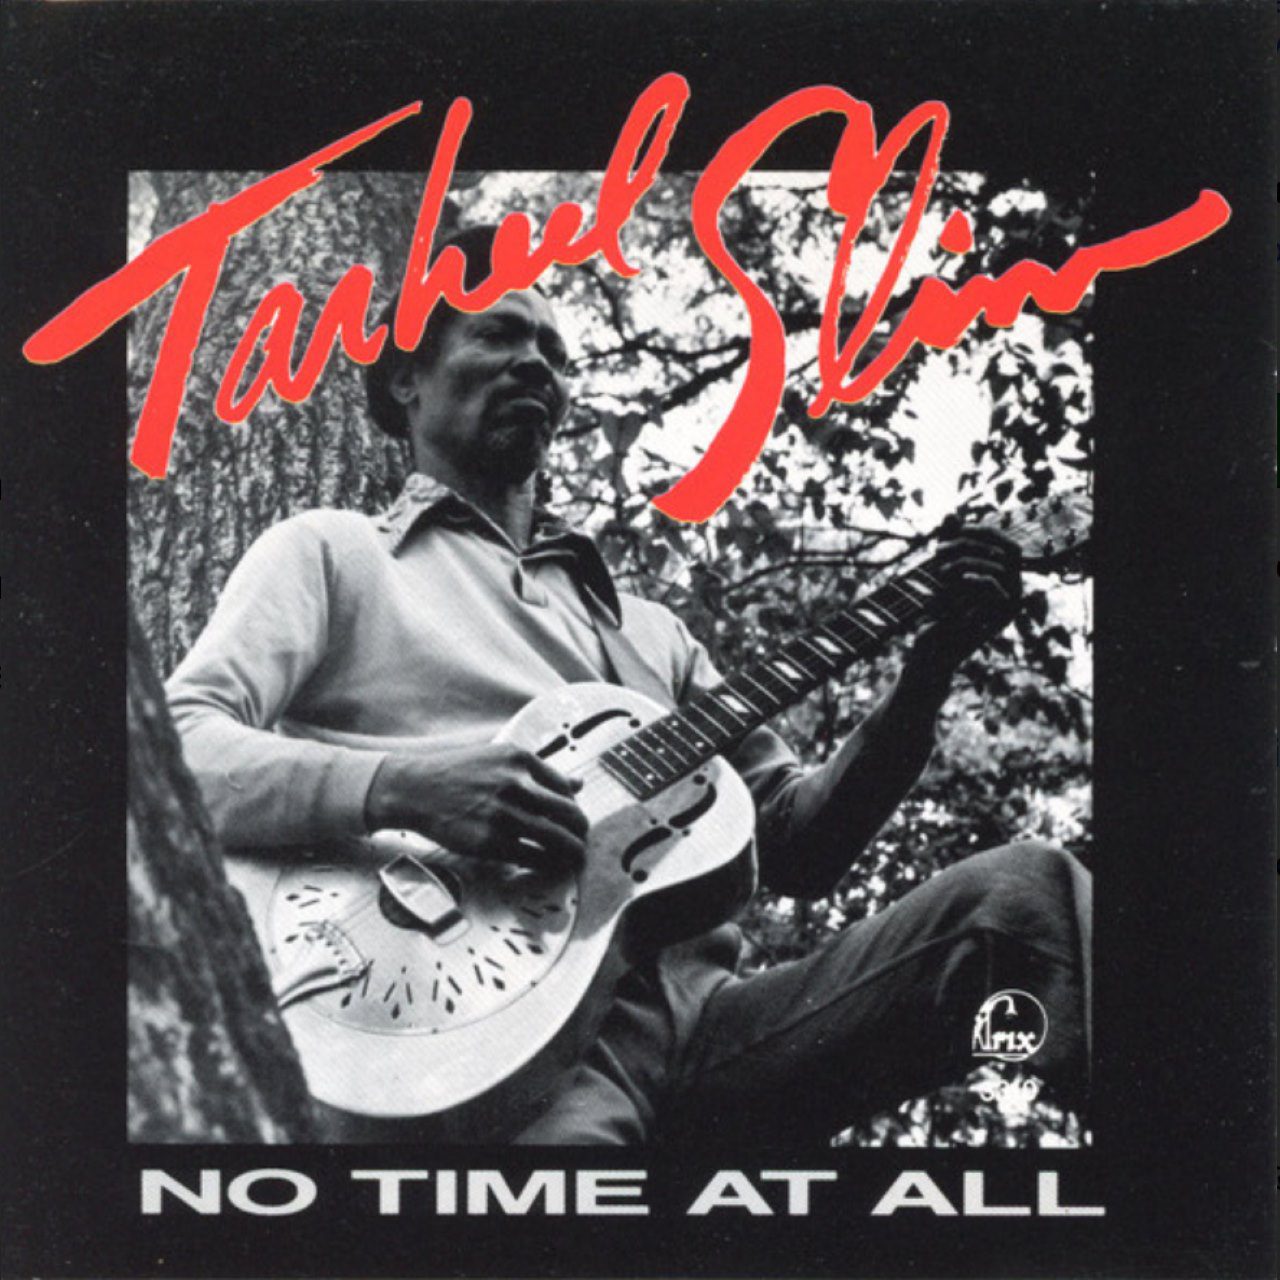 Tarheel Slim– No Time At All cover album